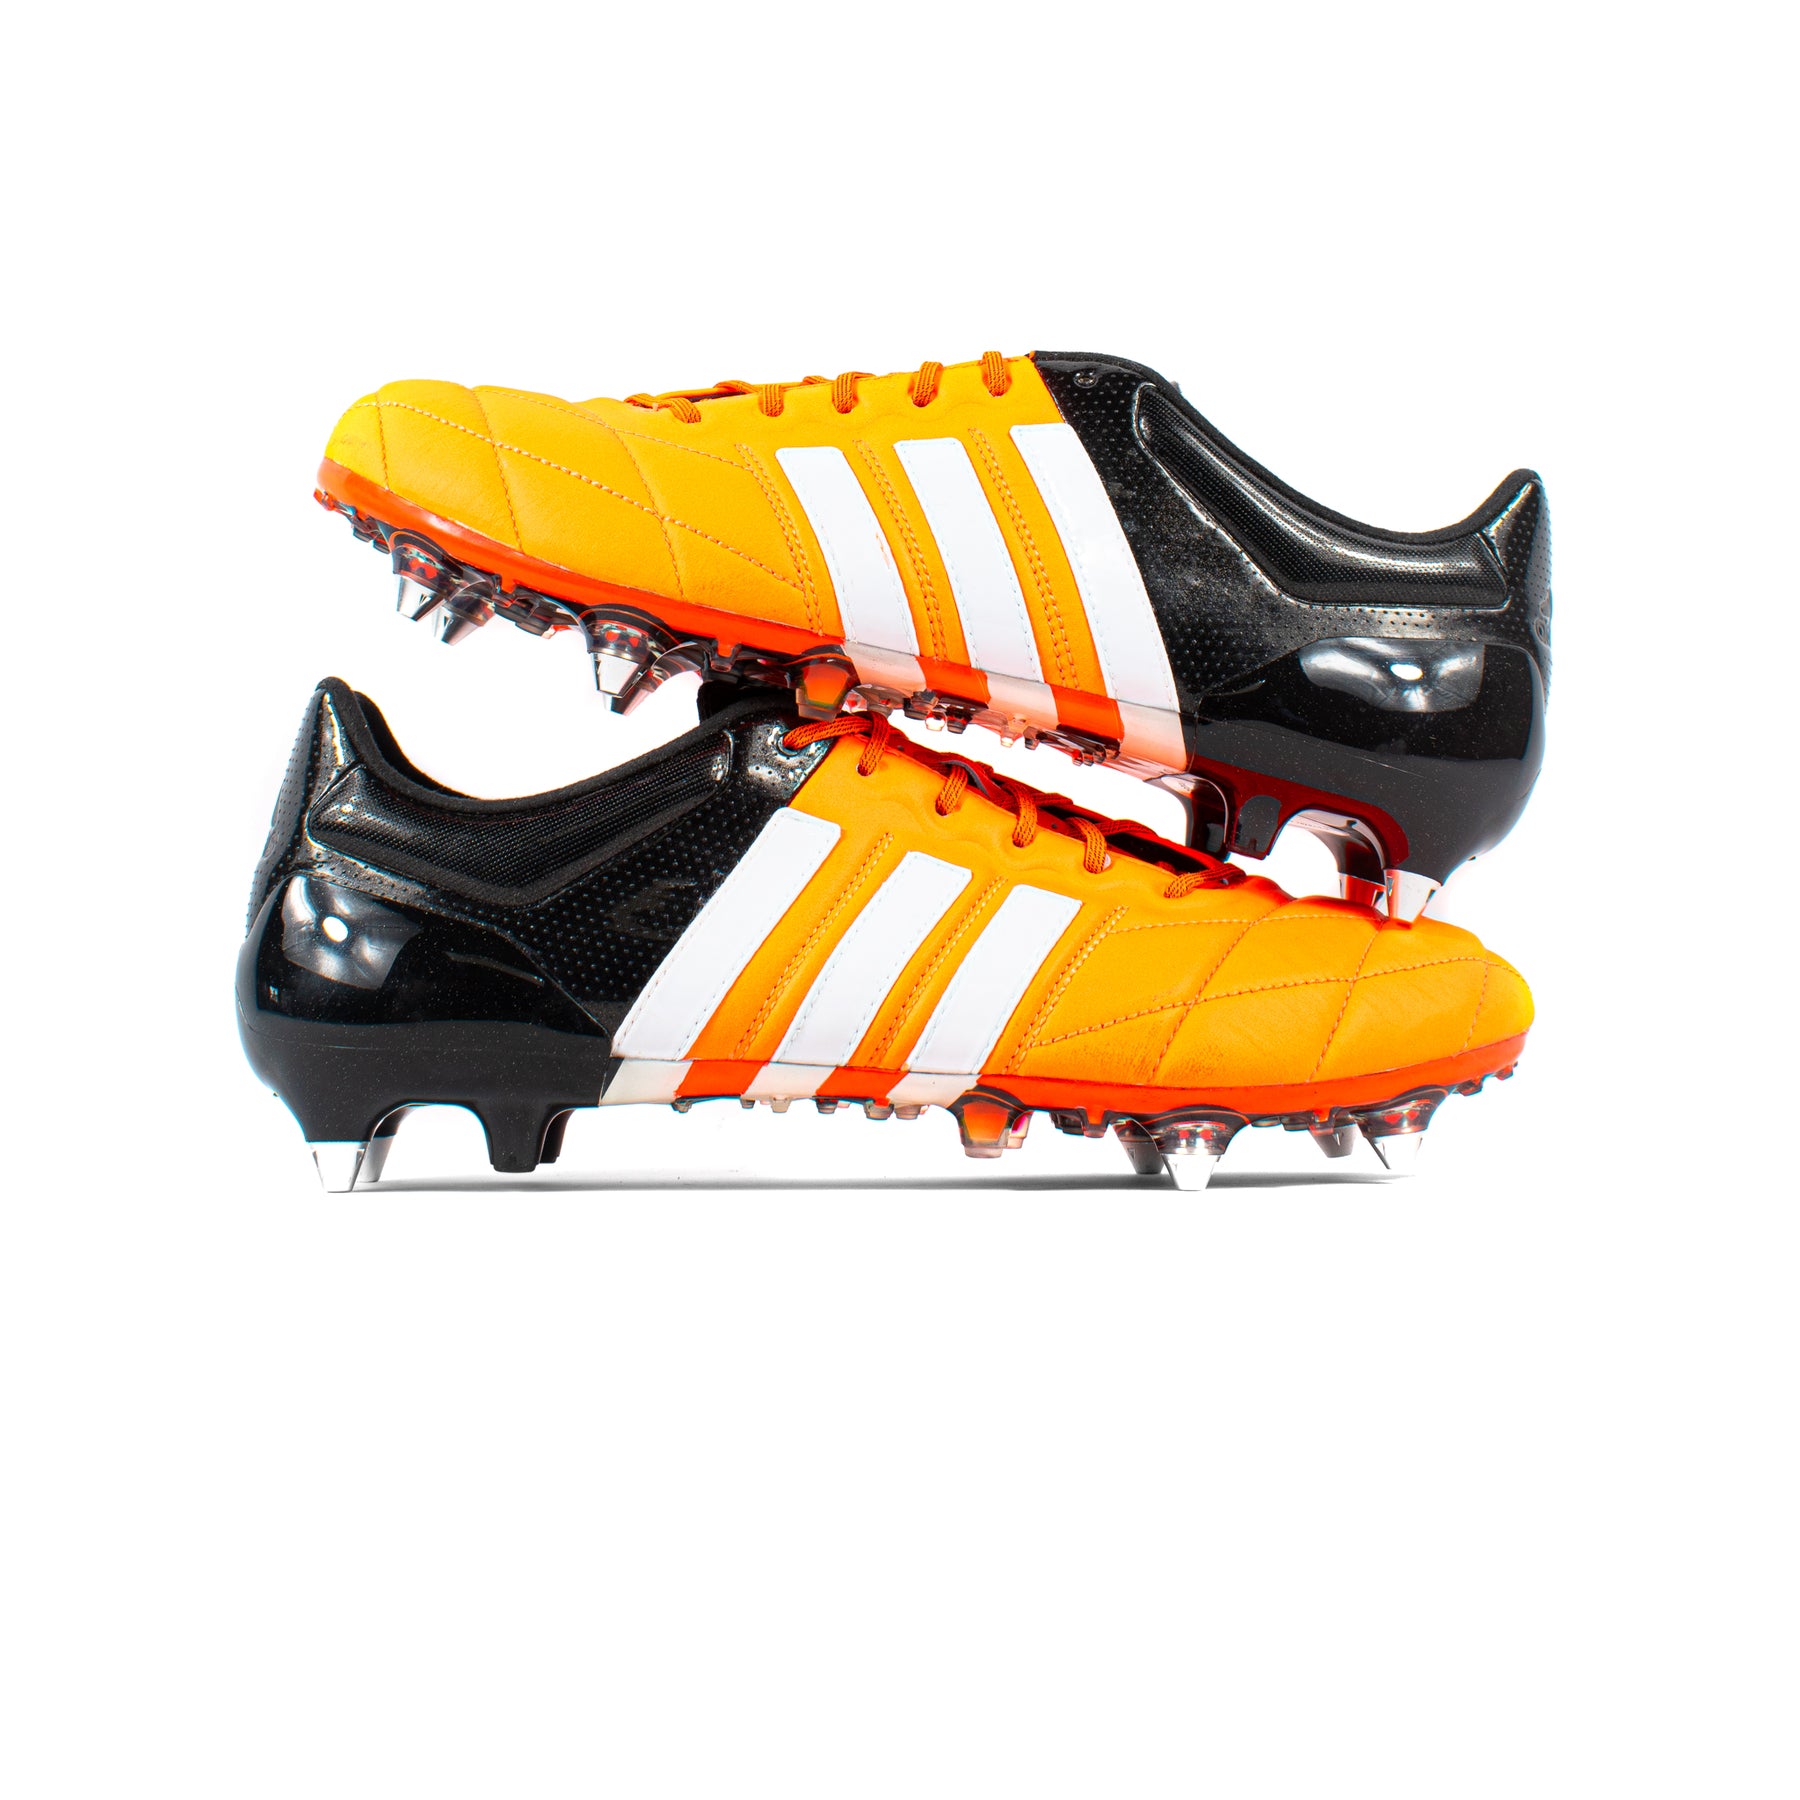 Decimal fantasma Descompostura Adidas Ace 15.1 Leather Orange SG – Classic Soccer Cleats